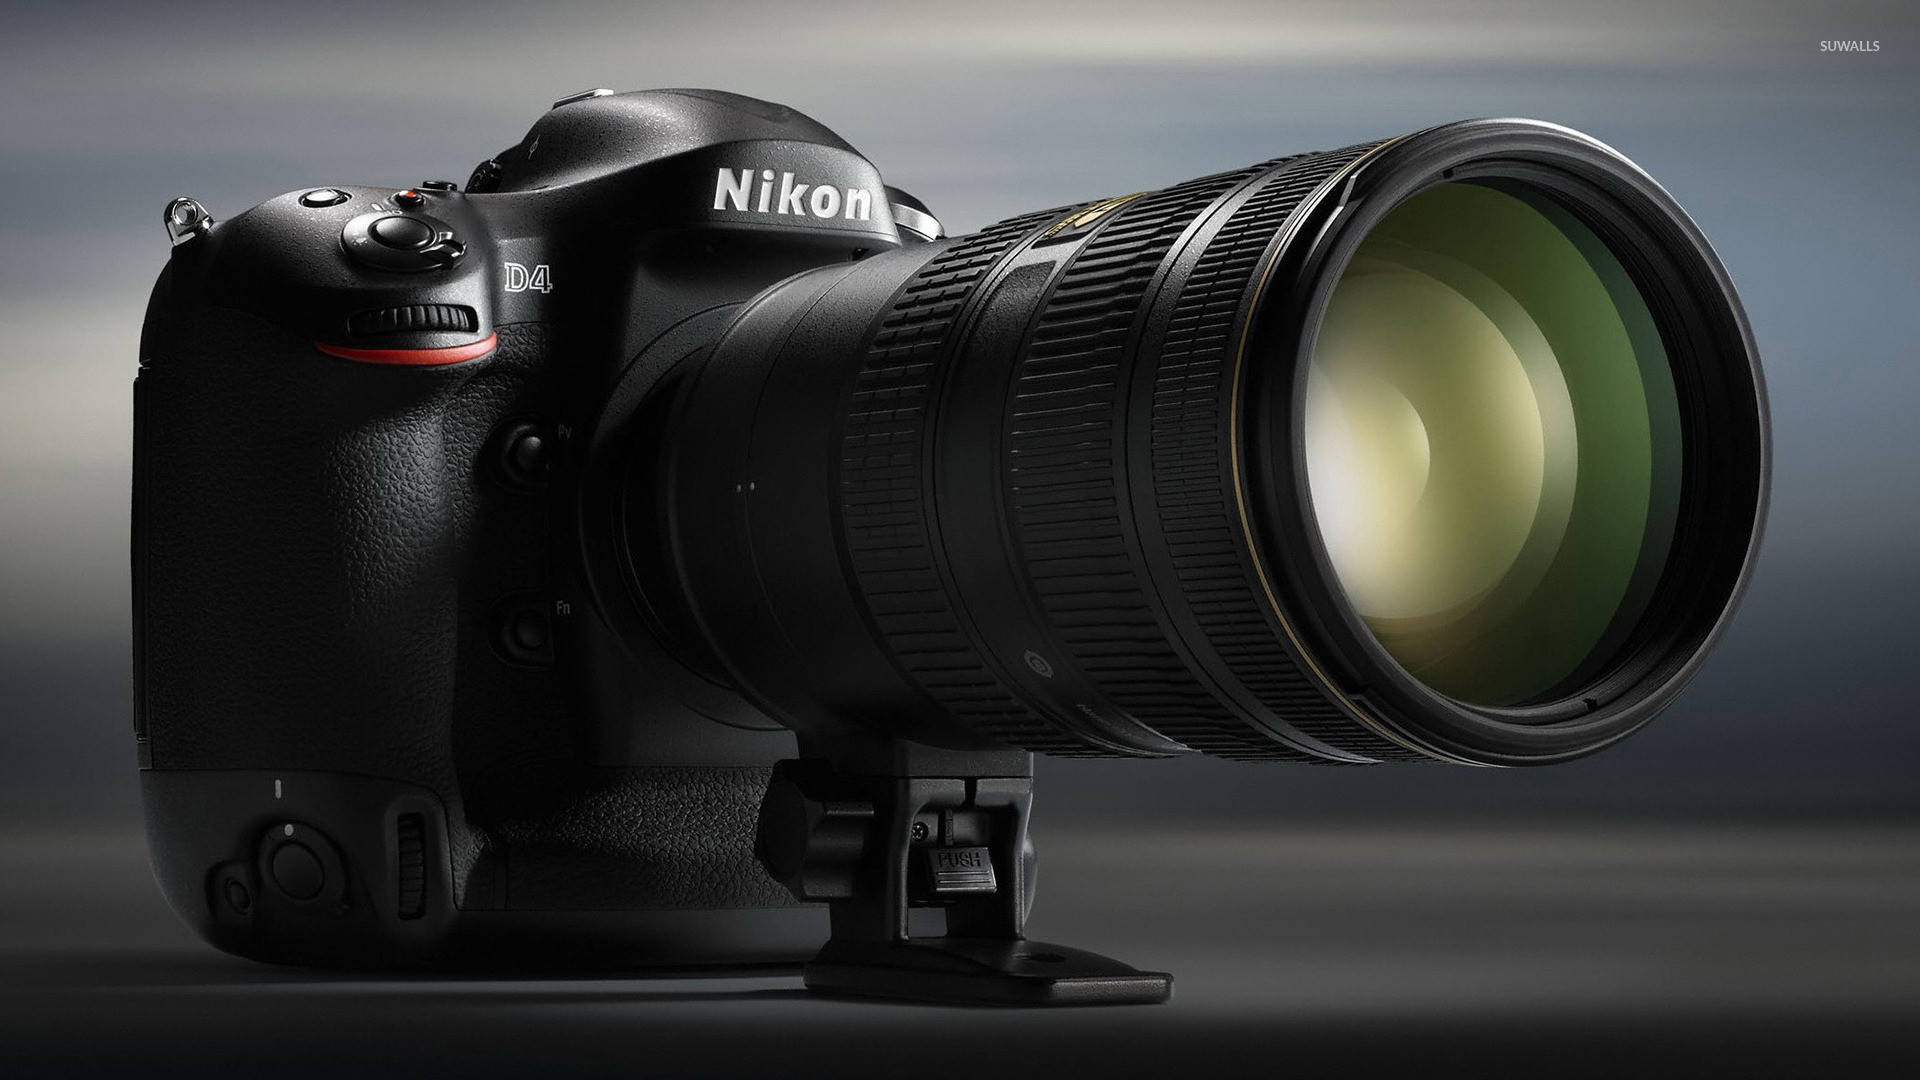 Nikon D4 Camera Background